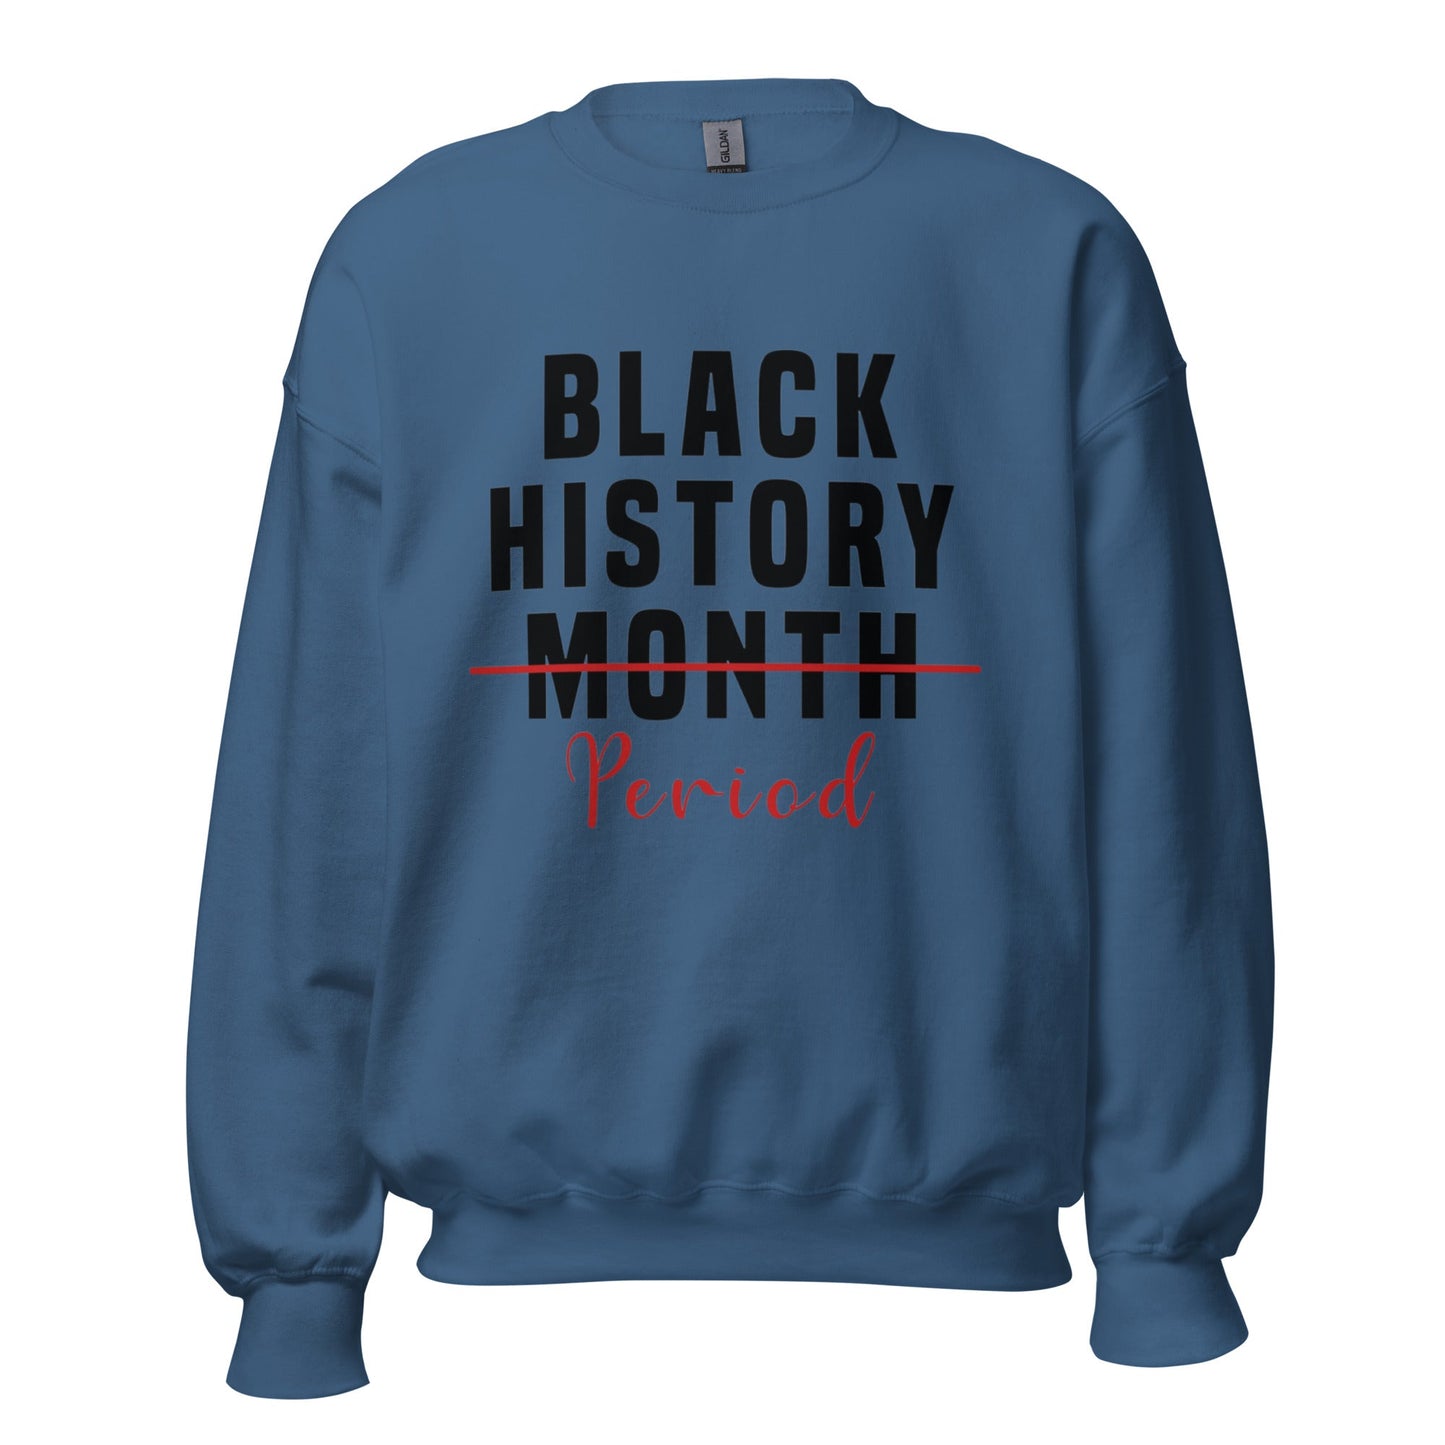 Black History Month "Period" Unisex Sweatshirt - Catch This Tea Shirts